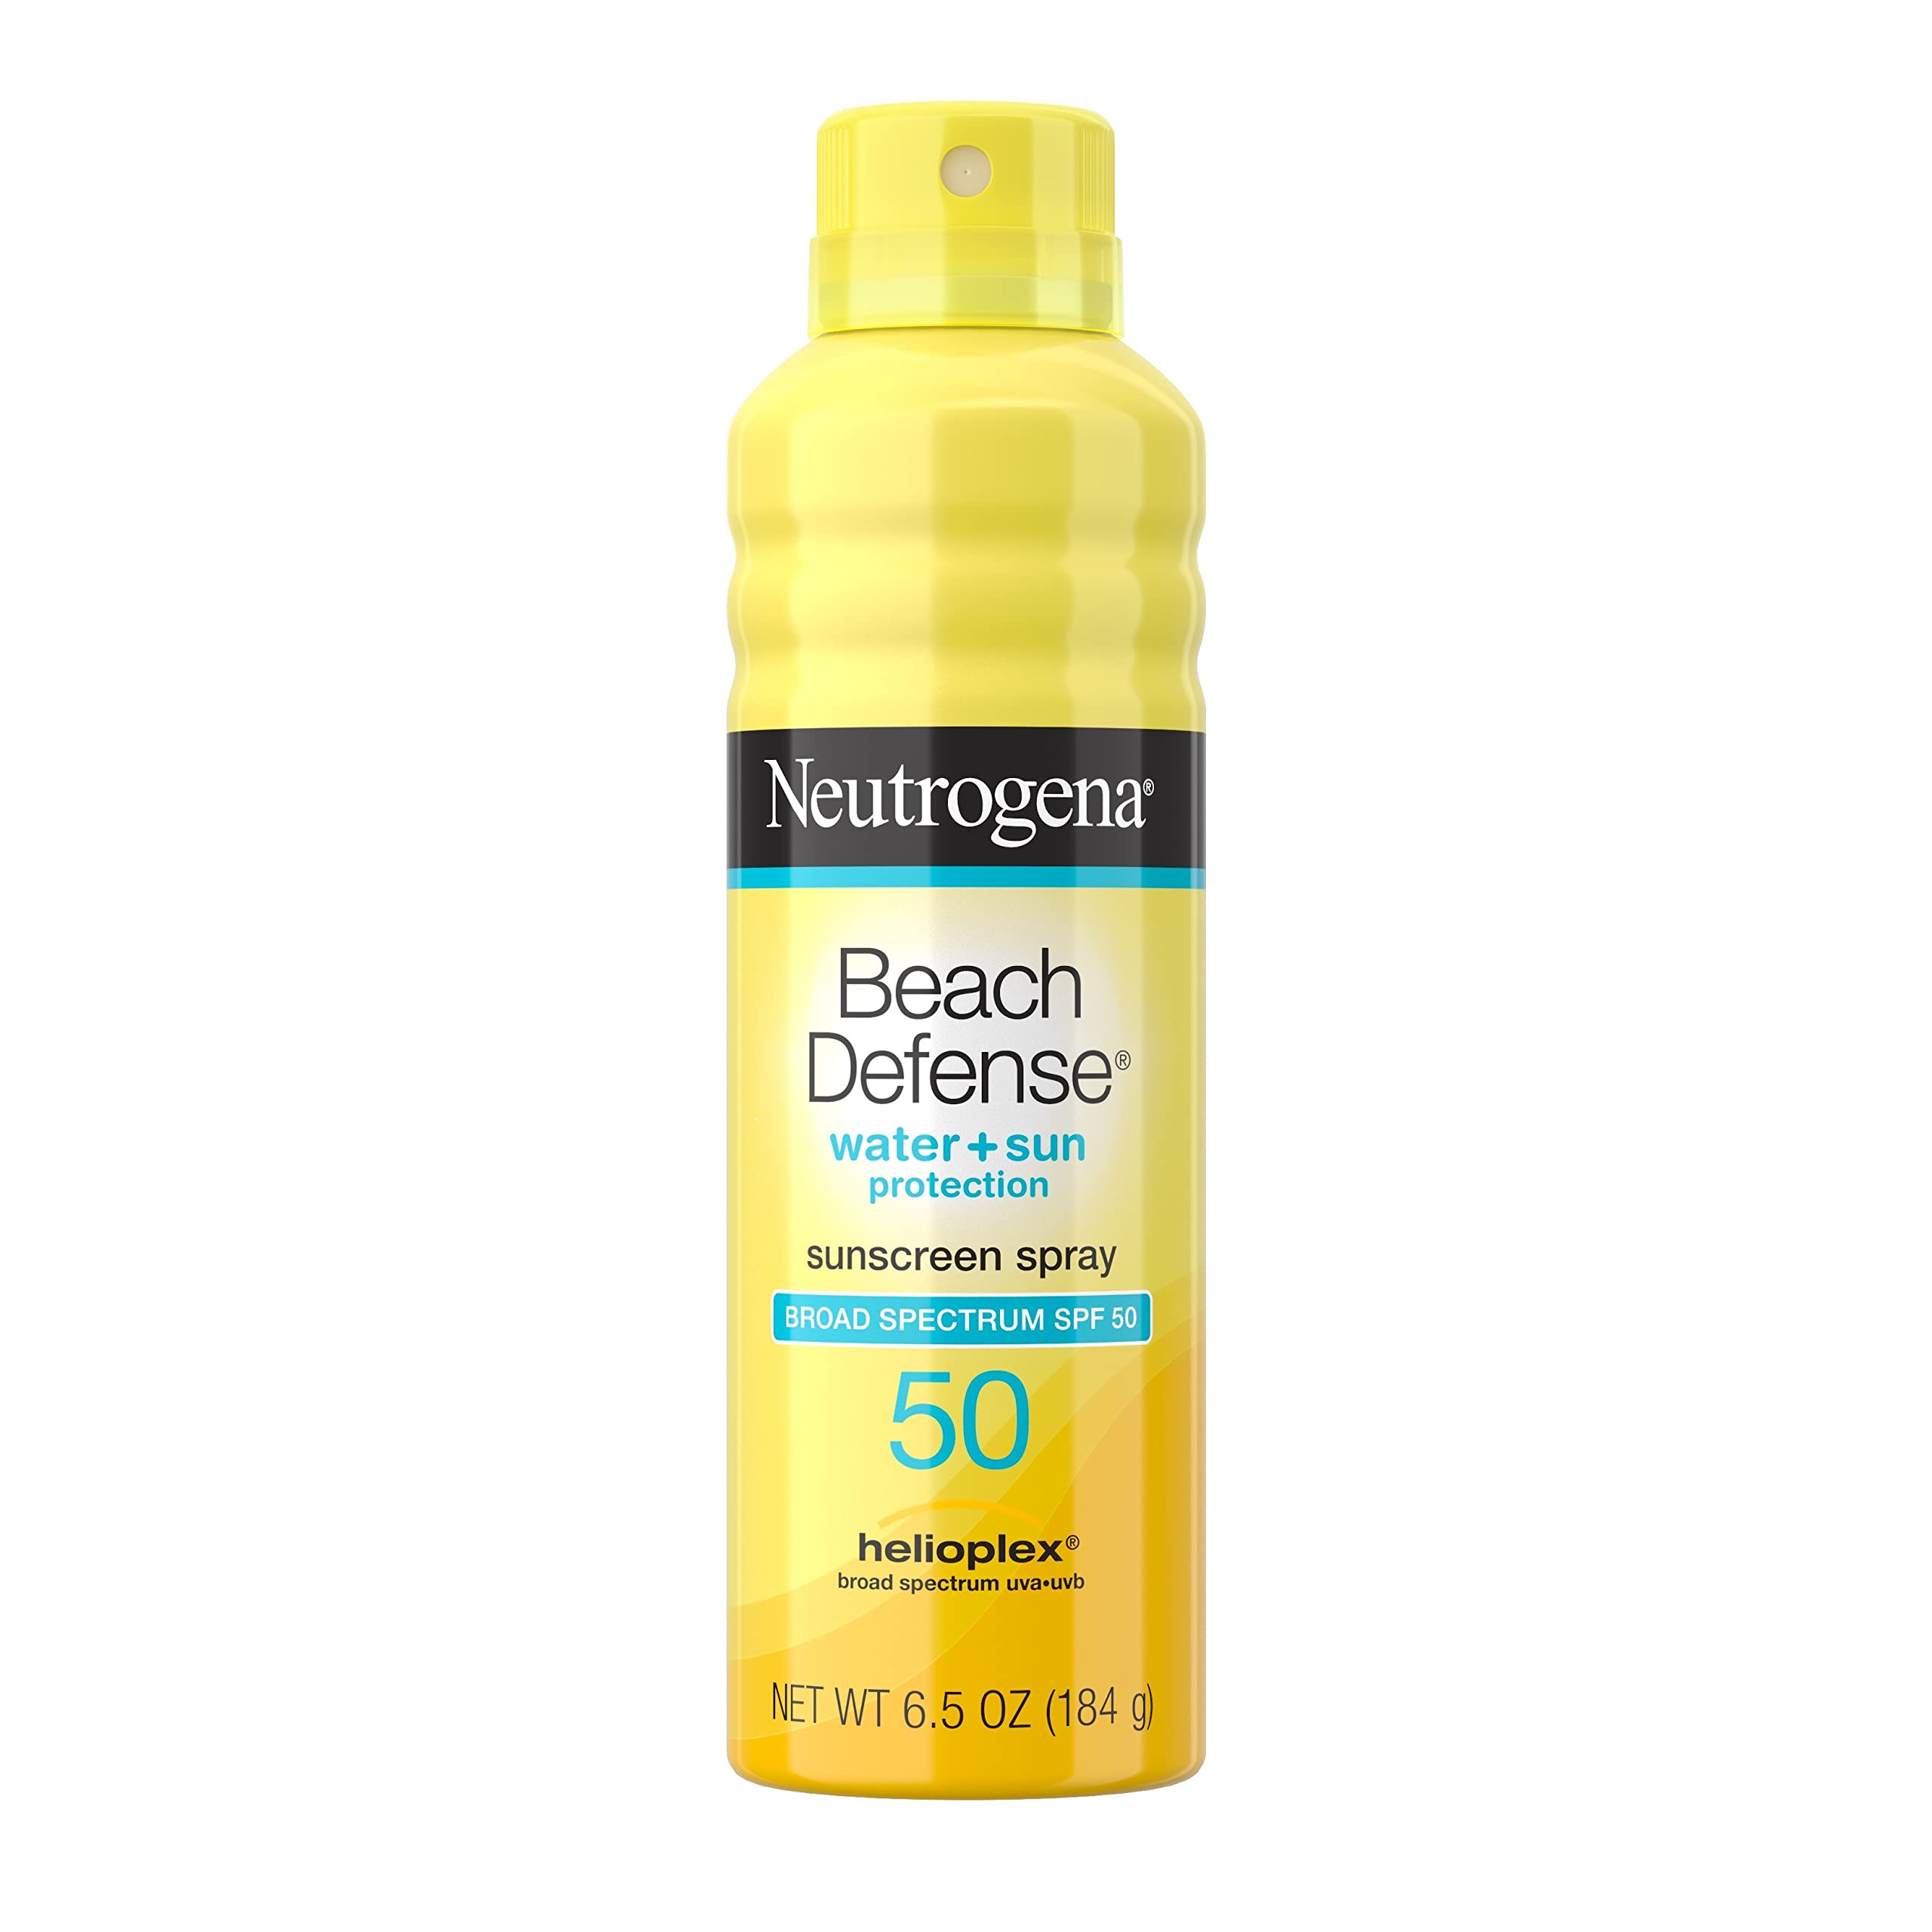 Neutrogena Beach Defense Sunscreen Spray SPF 50 Water-Resistant Body Spray [Subscribe & Save] $9.39